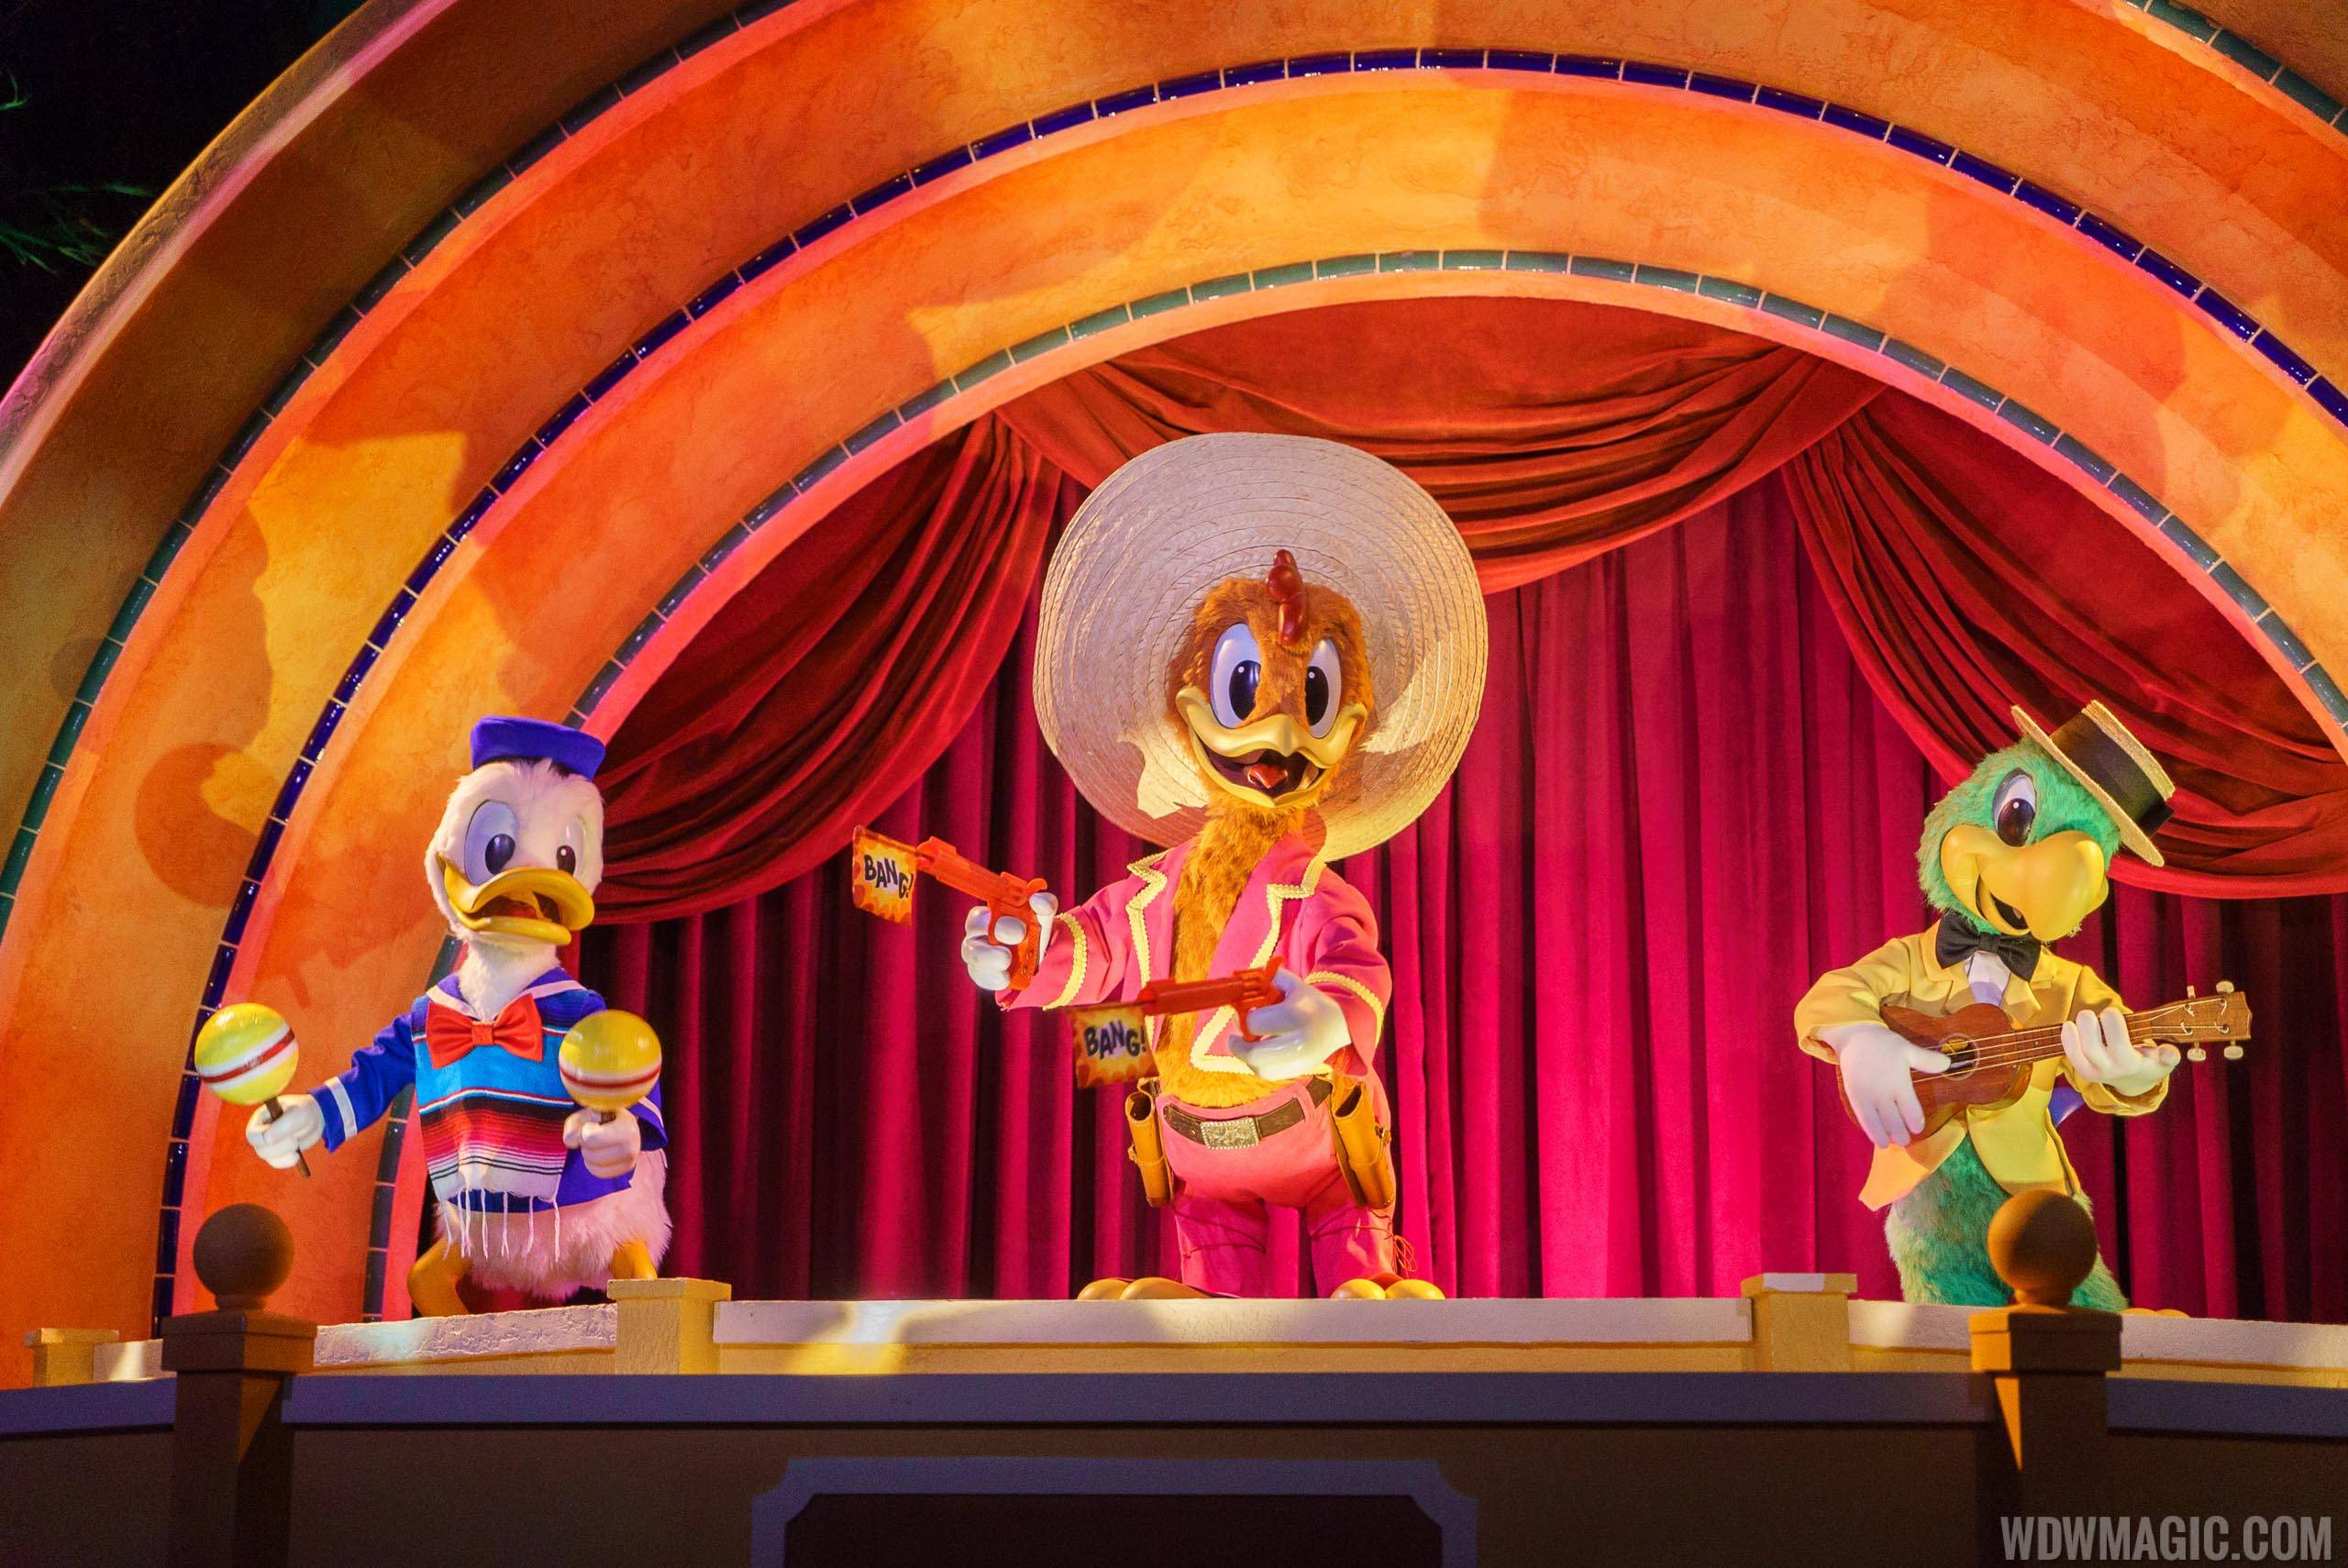 Panchito, José Carioca, and Donald Duck at the Gran Fiesta Tour